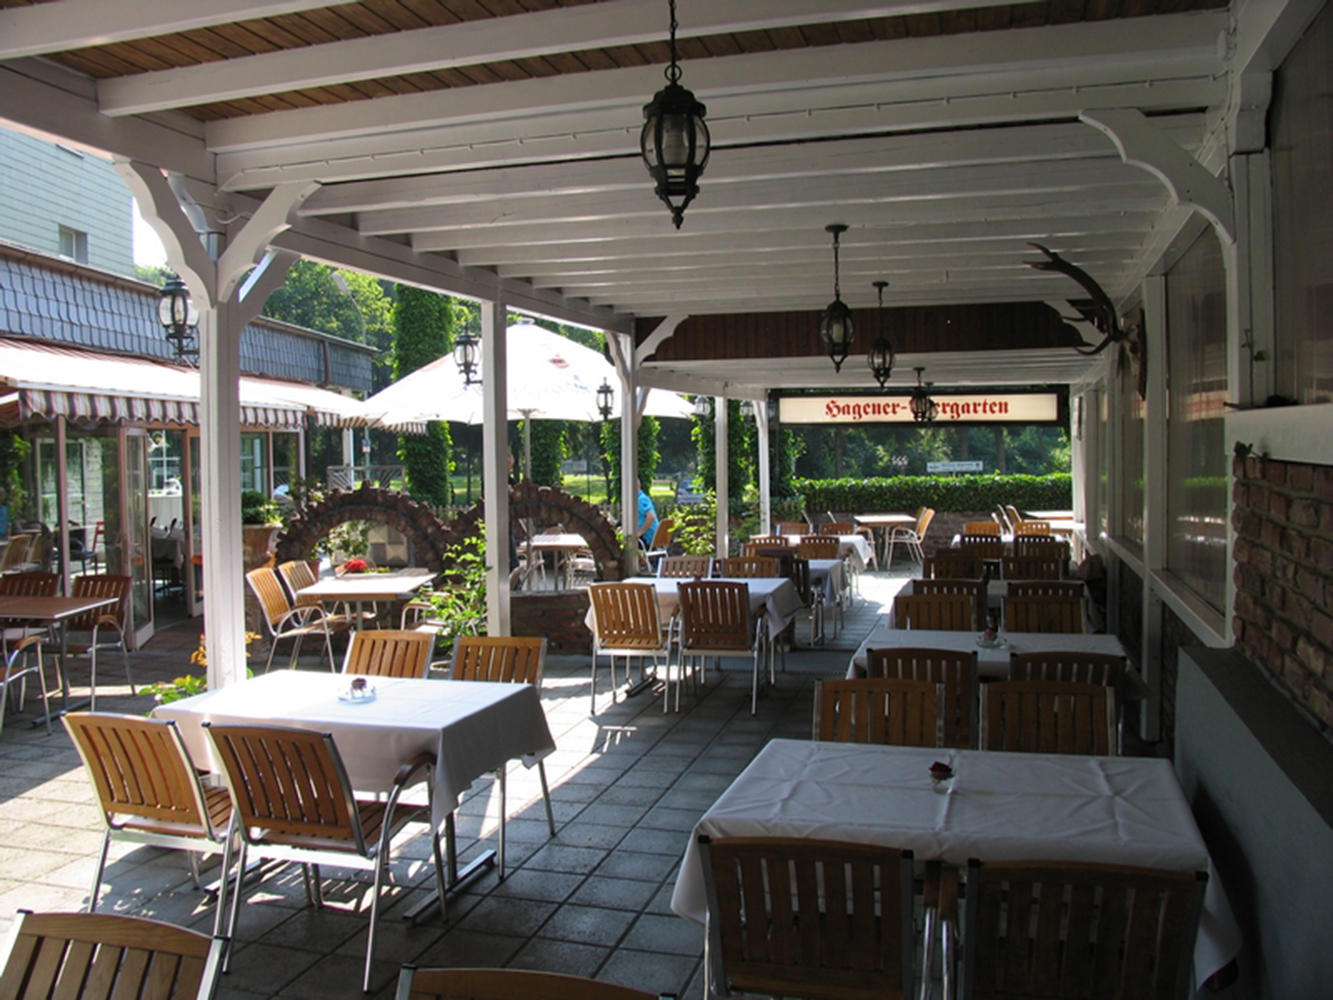 Restaurant Jägerruh Rajic-Pojavnik GbR, Schwerter Straße 67 in Hagen